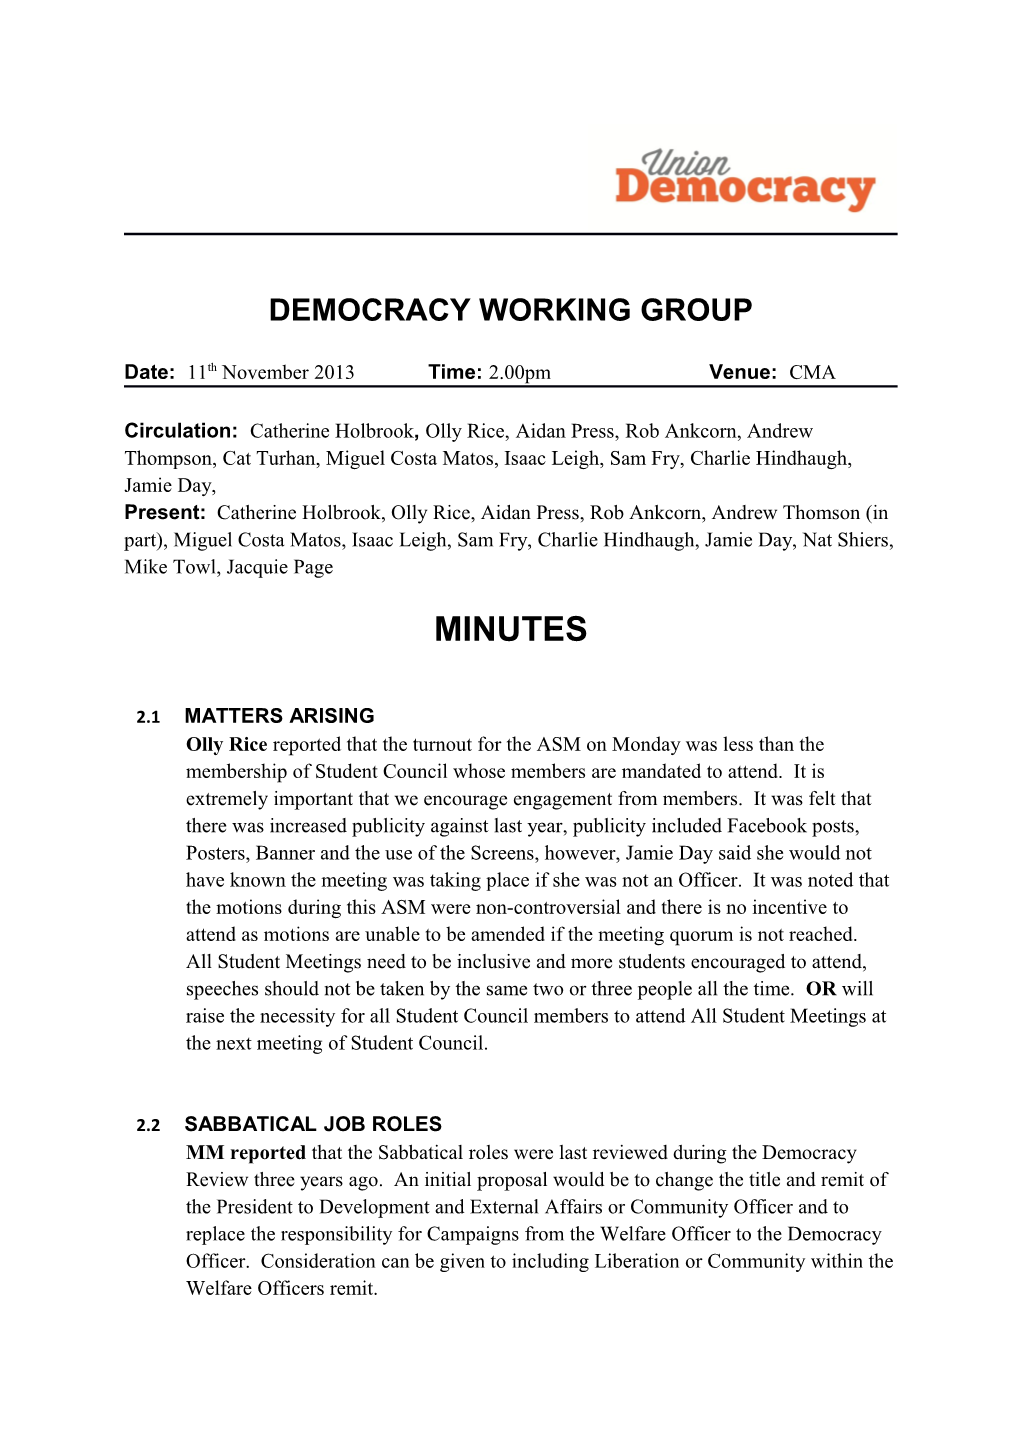 Democracy Working Group